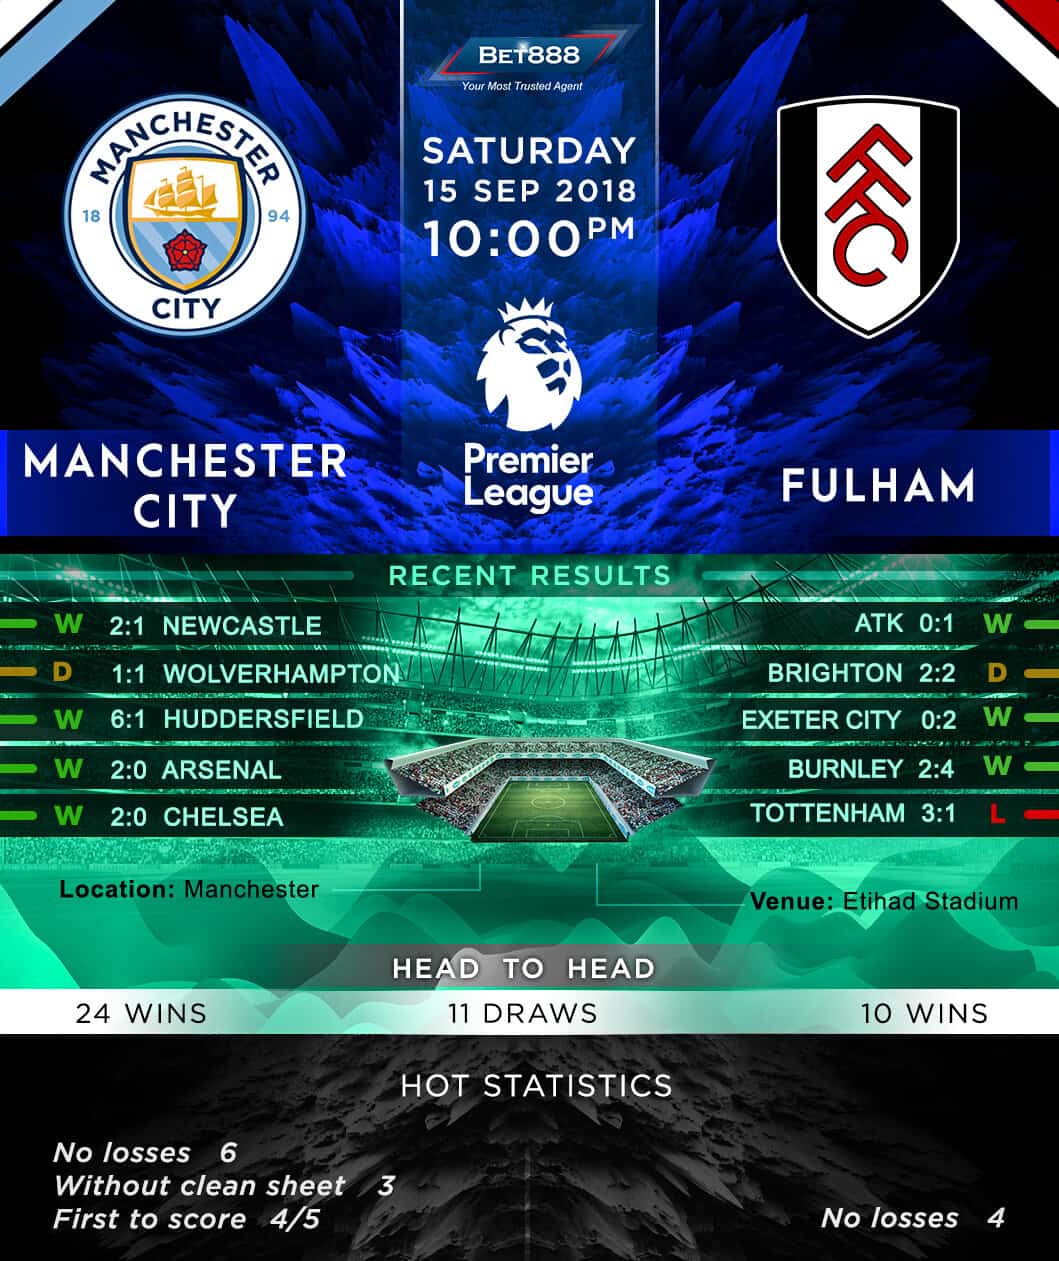 Manchester City vs Fulham 15/09/18